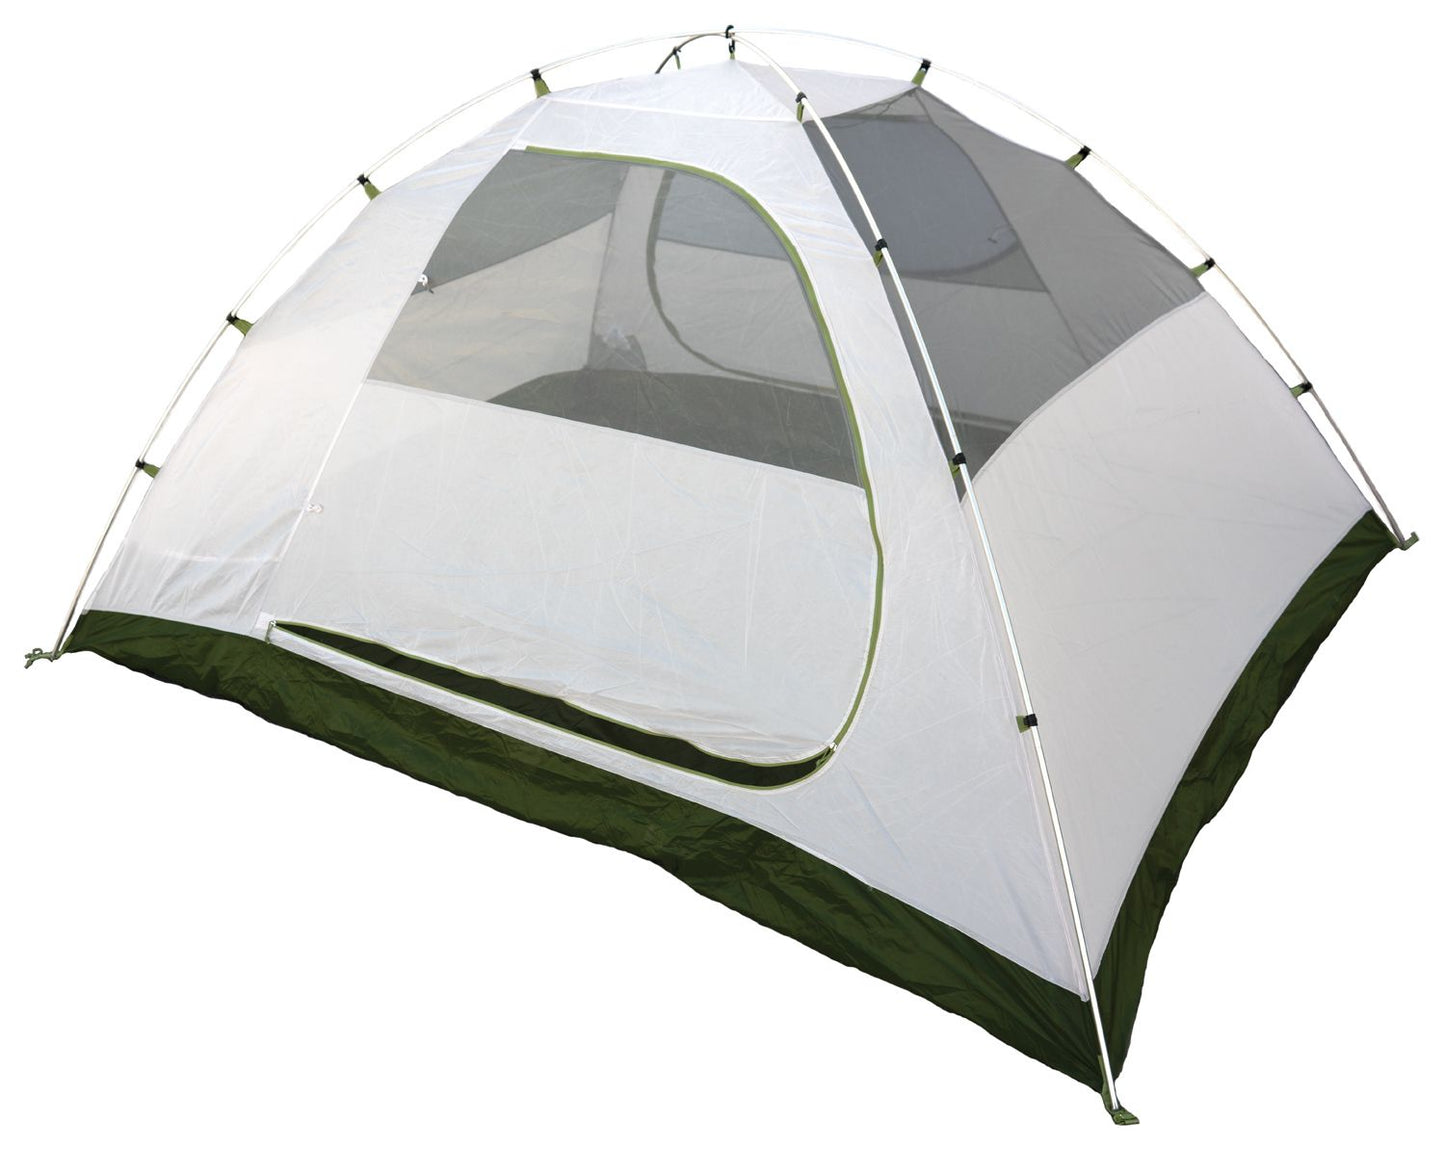 Peregrine Equipment Gannet 2-Person Tent 580555